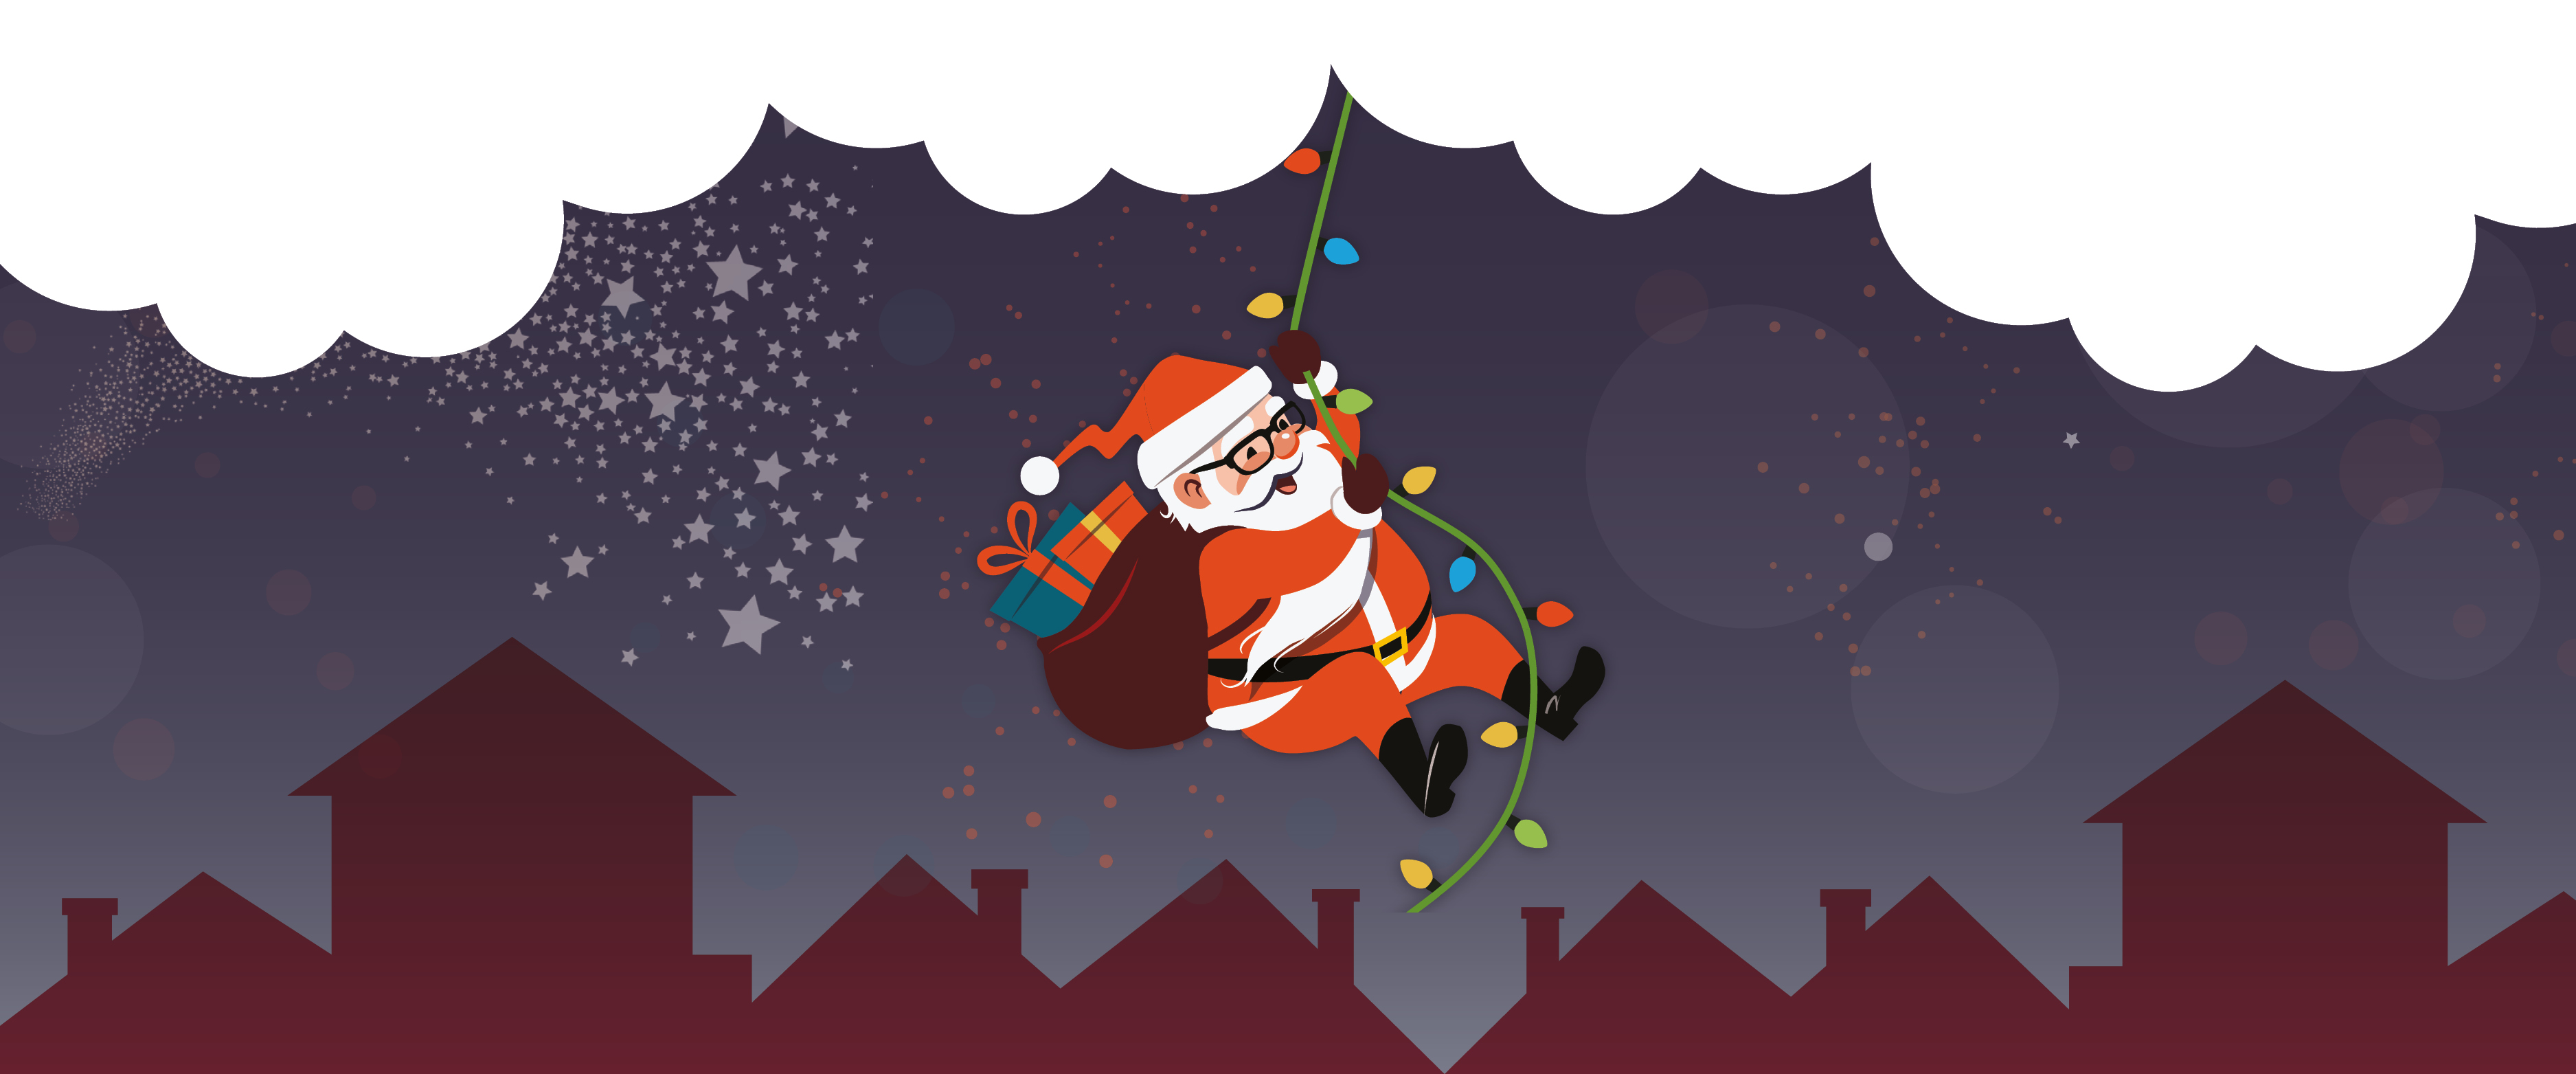 Santa swinging on Christmas lights above the housetops